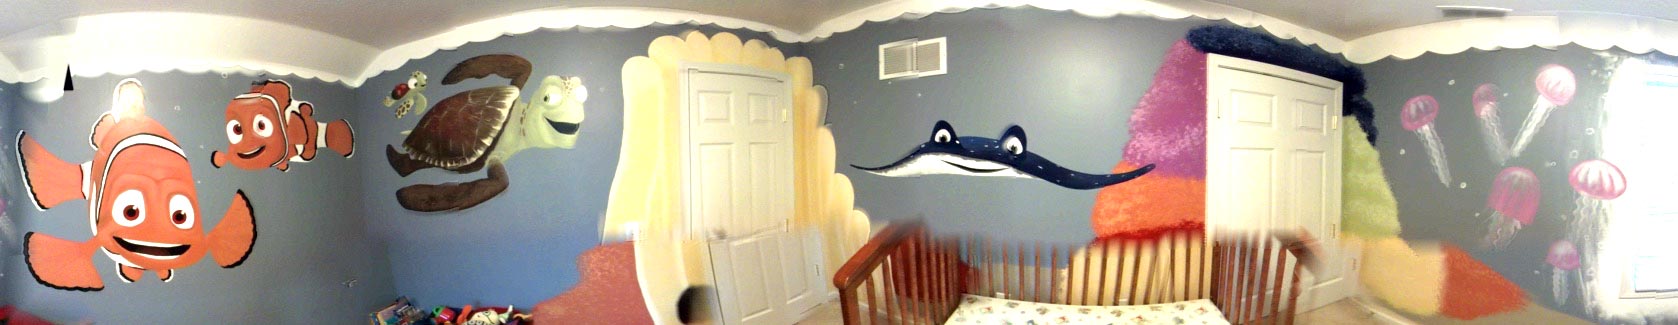 Eli's Nemo painted mural room.